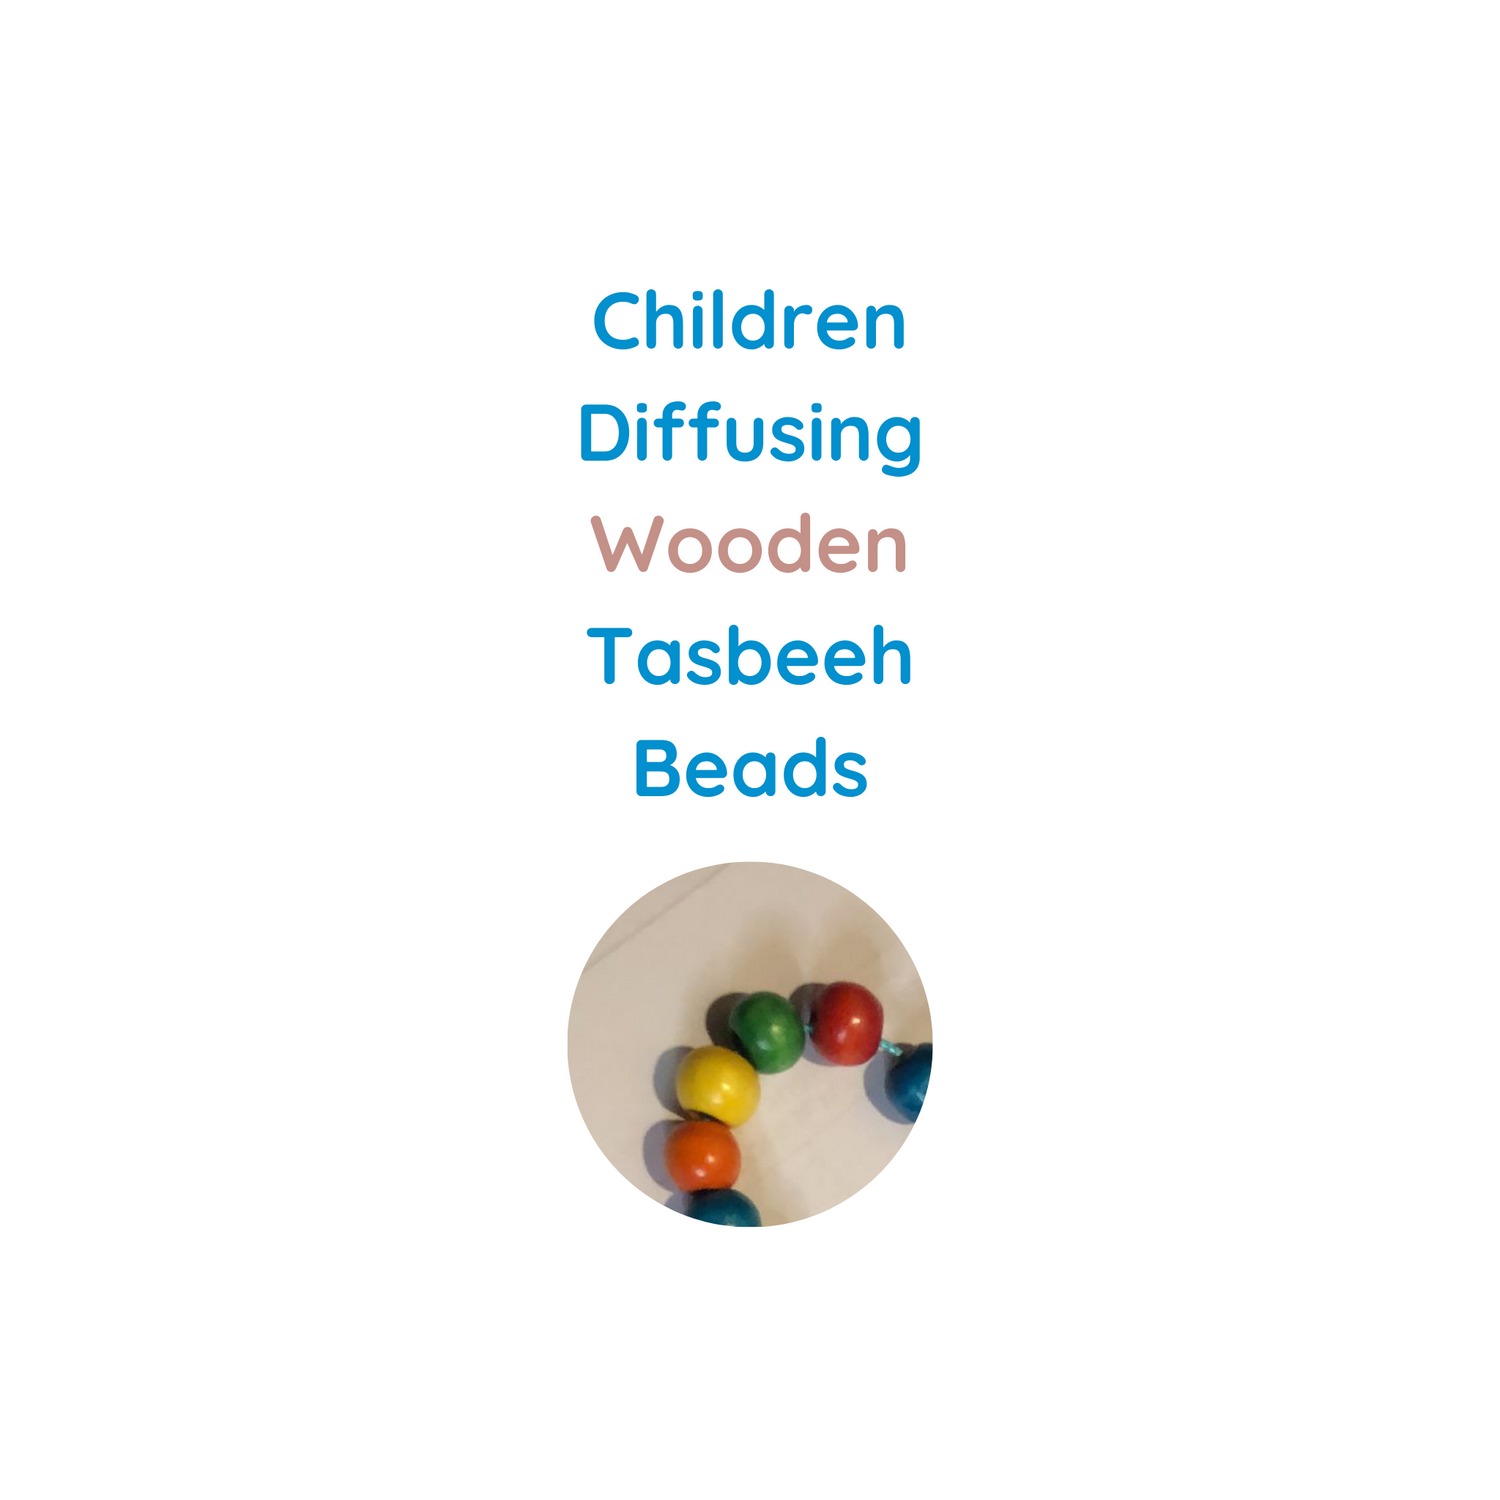 Children Diffusing Wooden Tasbeeh Beads